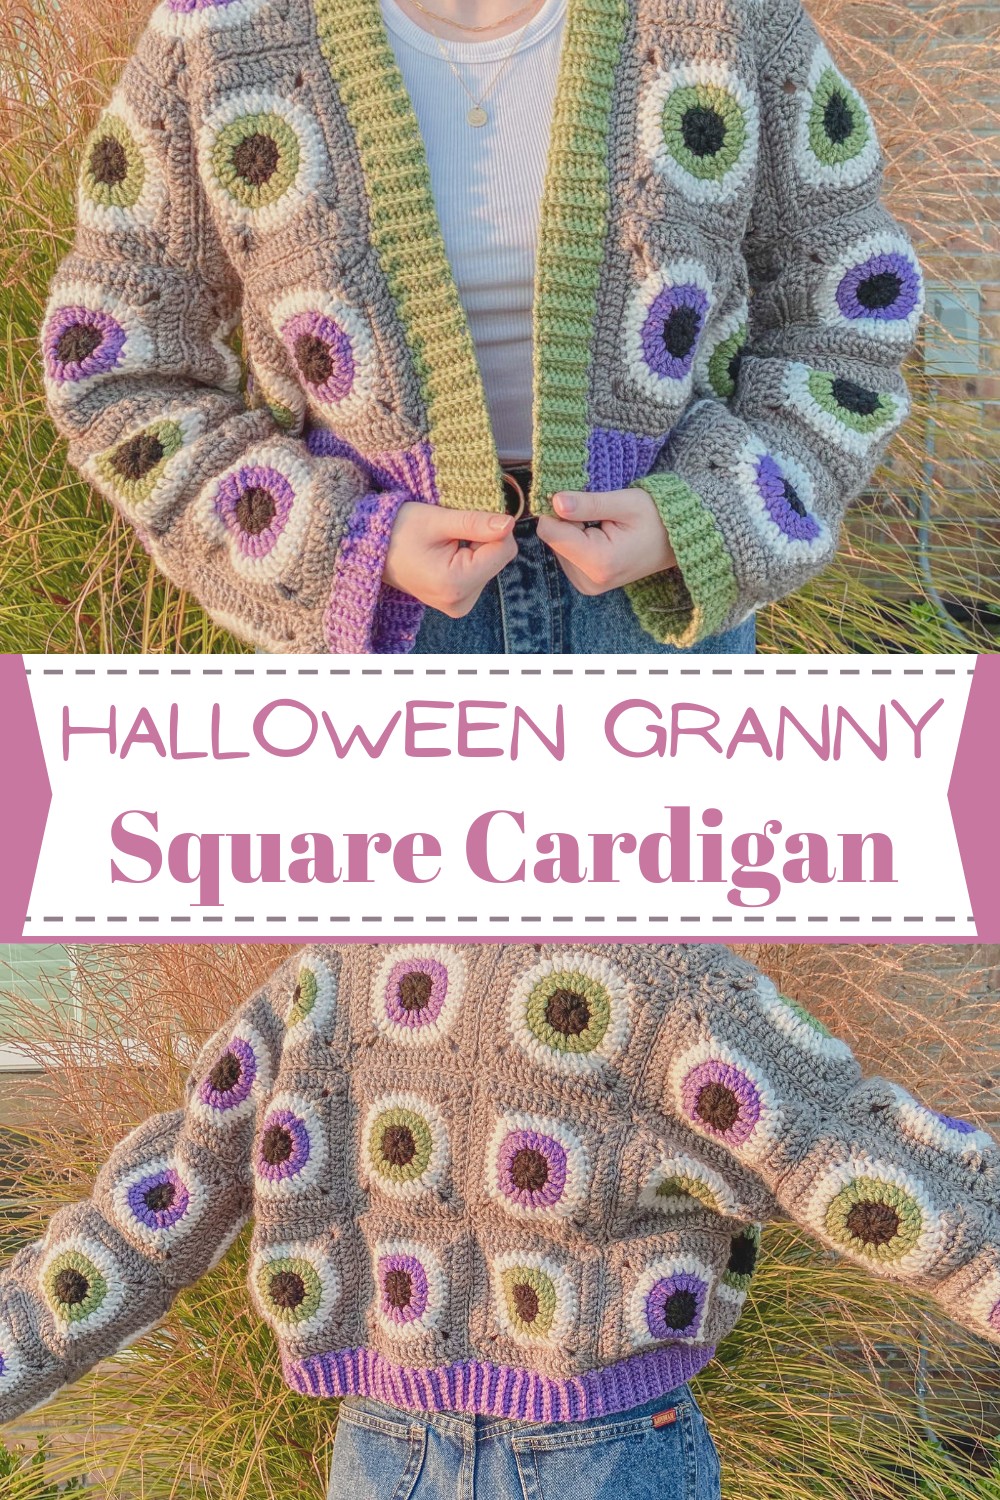 Halloween Granny Square Cardigan